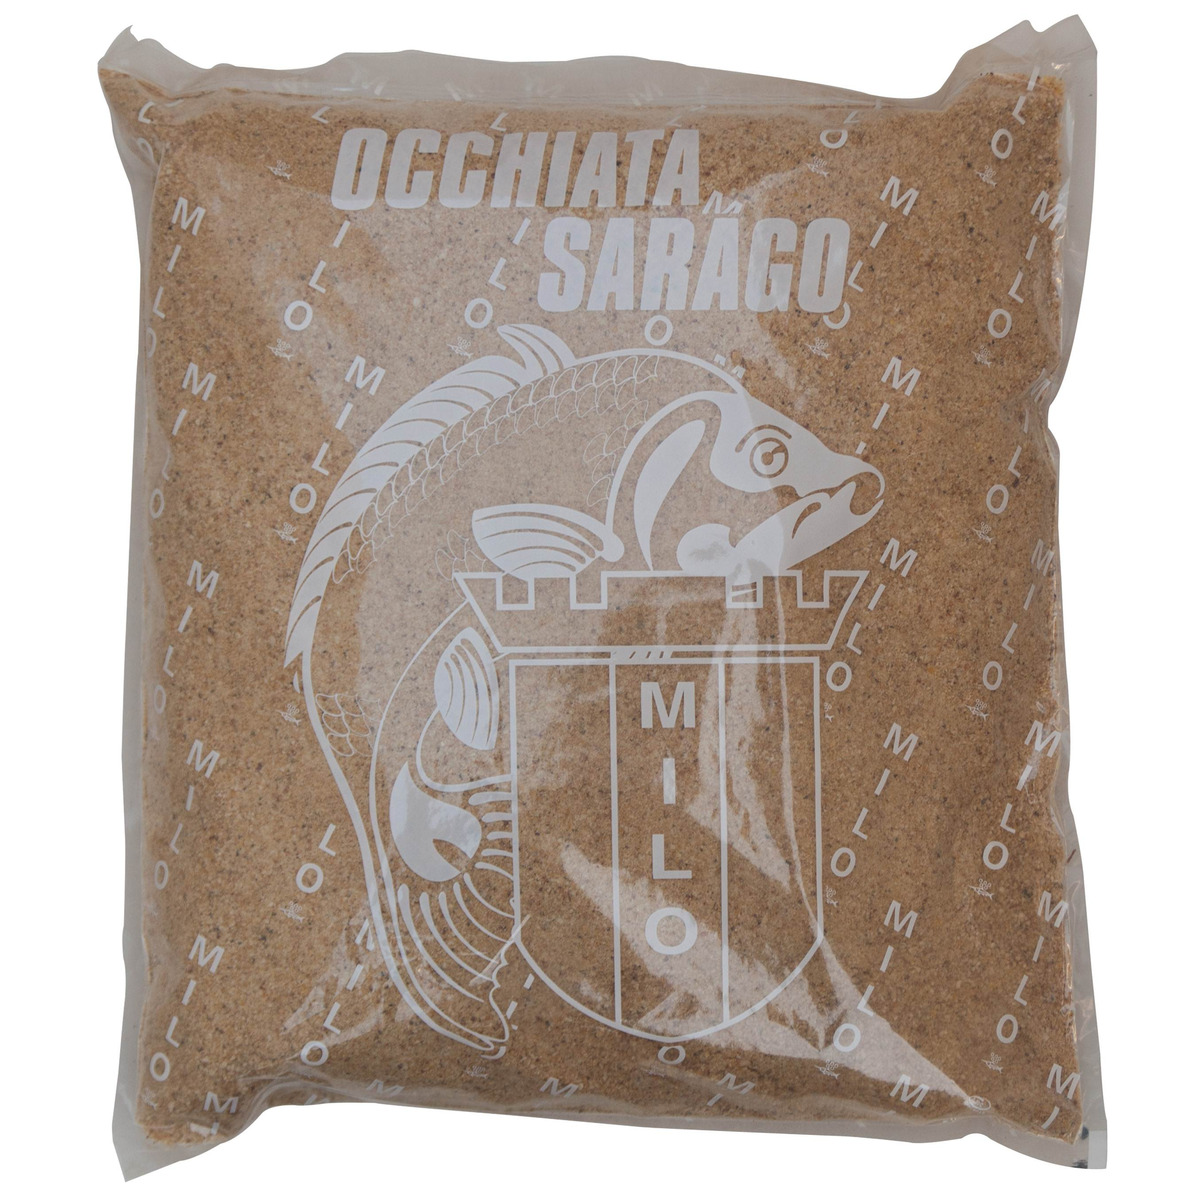 Milo Occhiata Sarago - 2,500 Kg